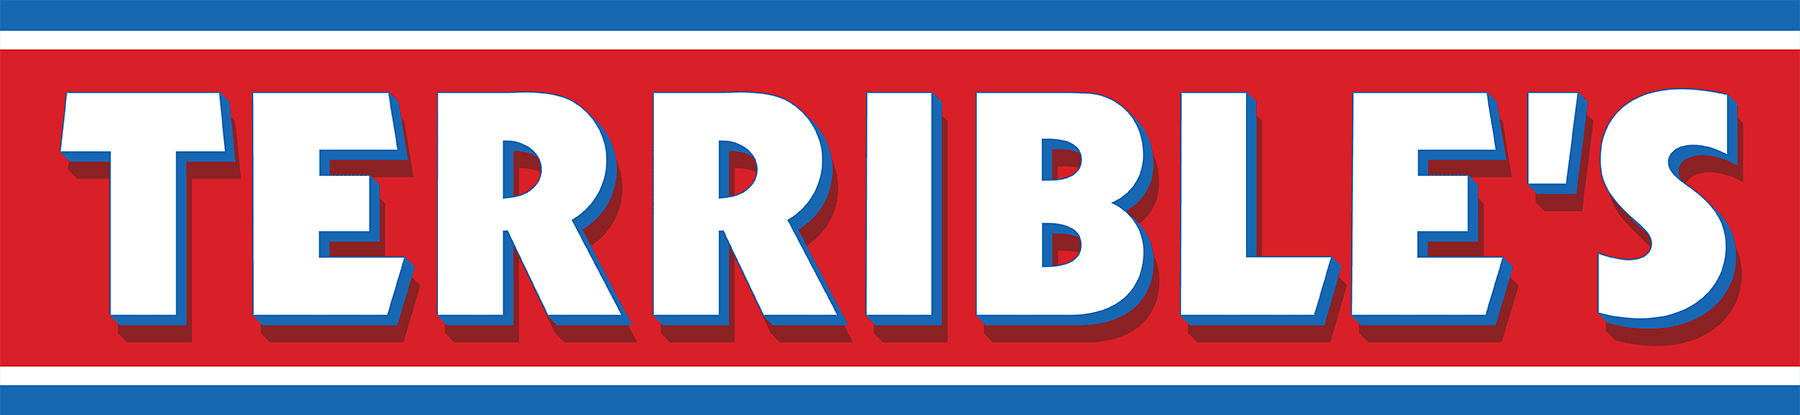 Terribles-Logo.png